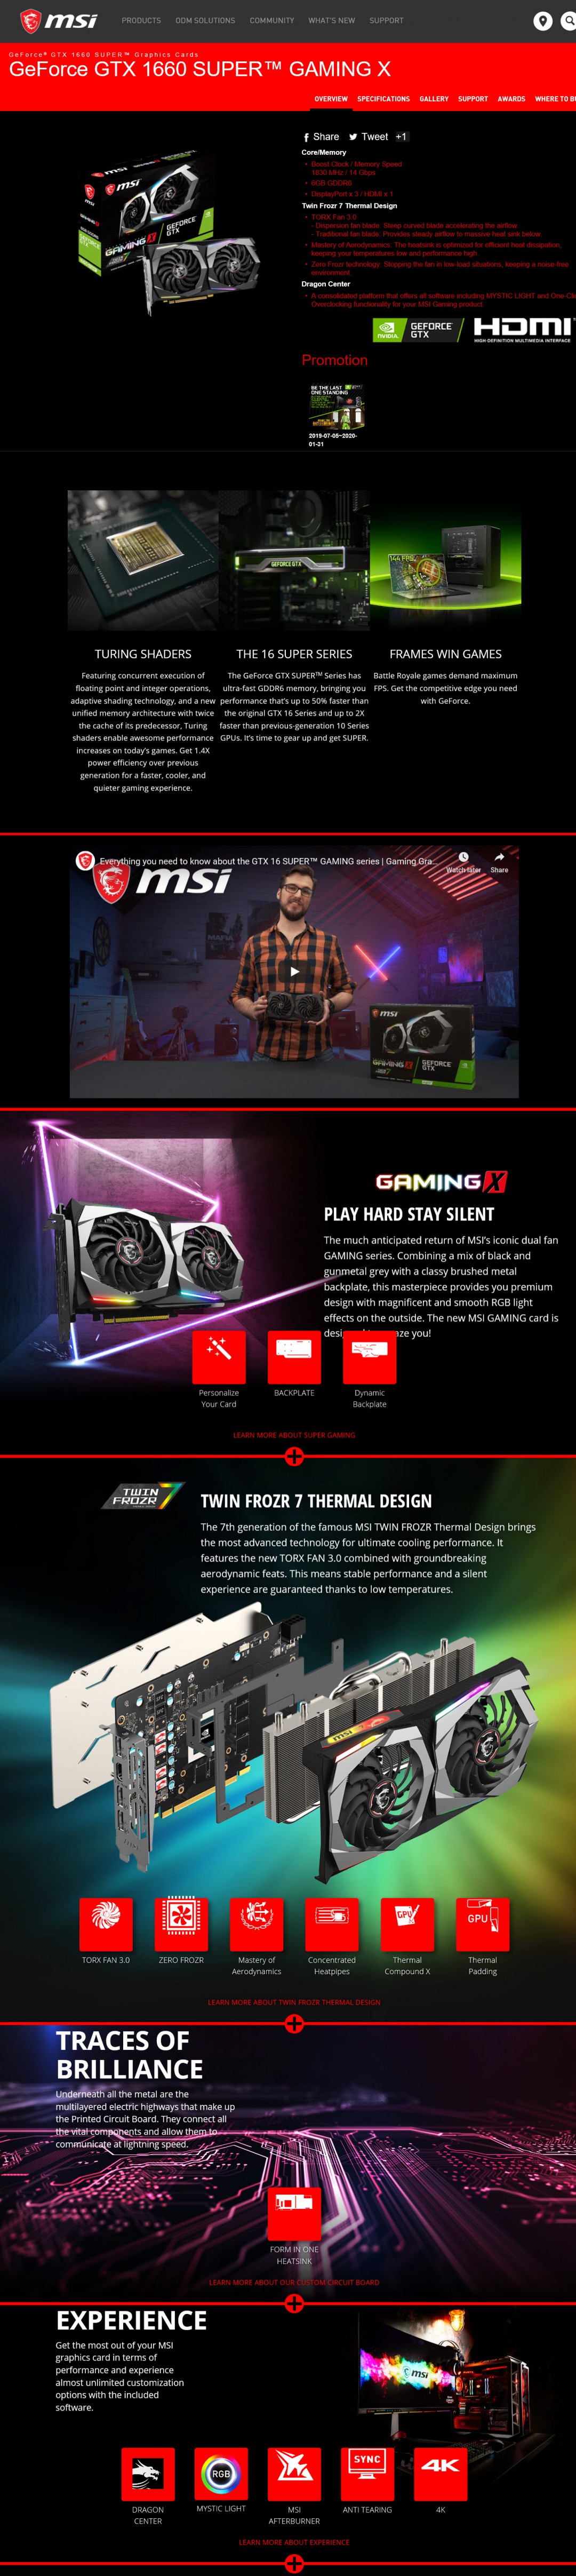 2019 12 05 18 47 05 MSI Geforce GTX 1660 Super GAMING X Review